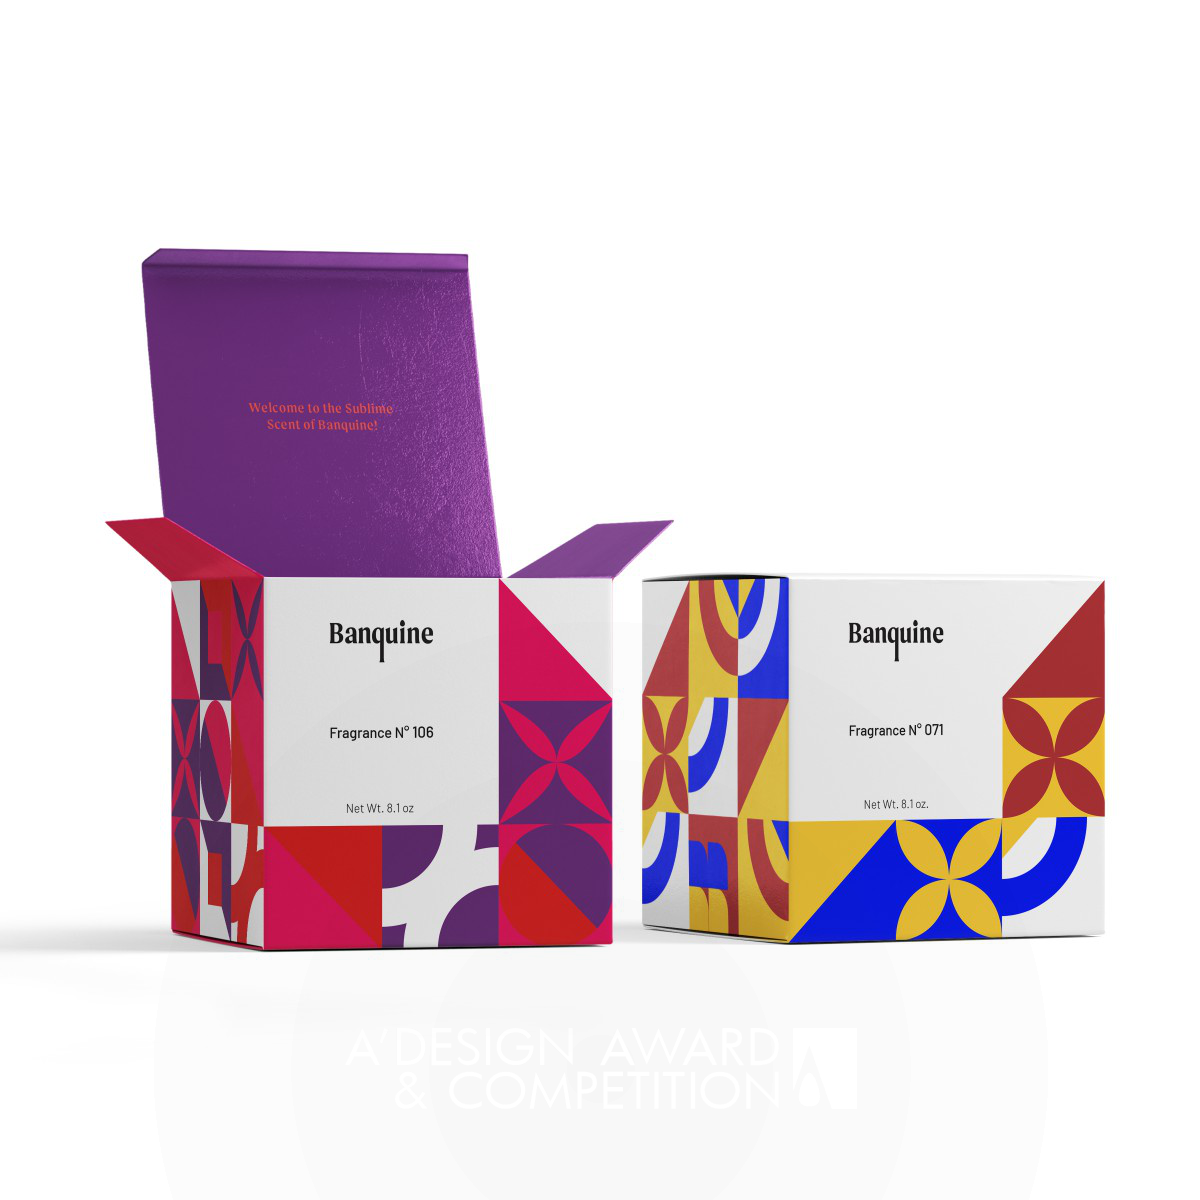 Banquine Packaging by Eva Van der Borght